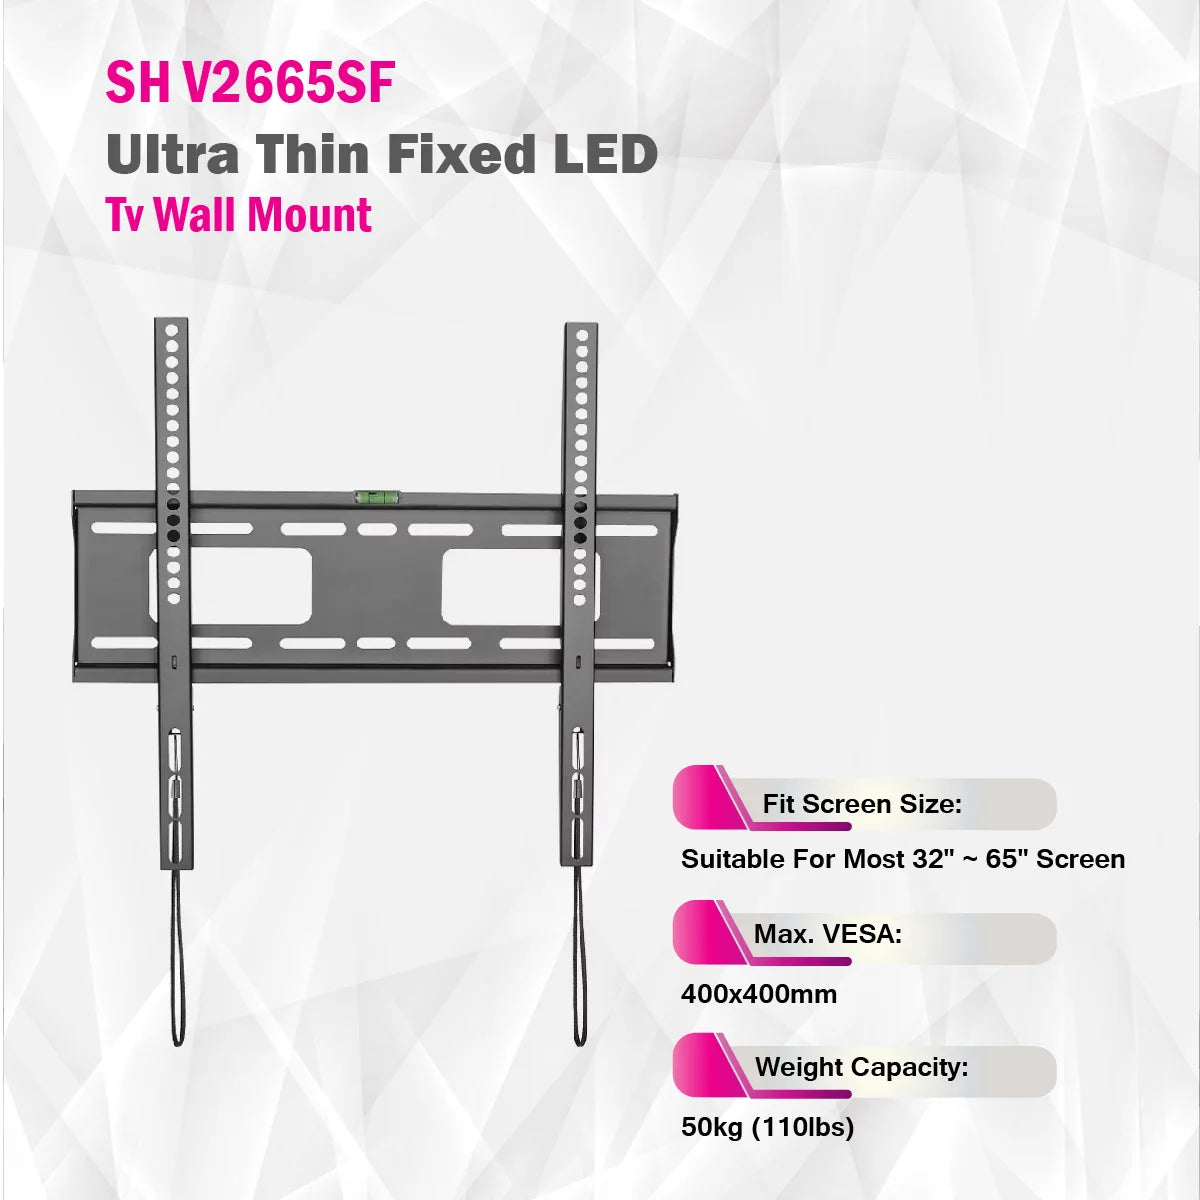 SkillTech - SH V2665SF - Slim Profile Fixed TV Wall Mount